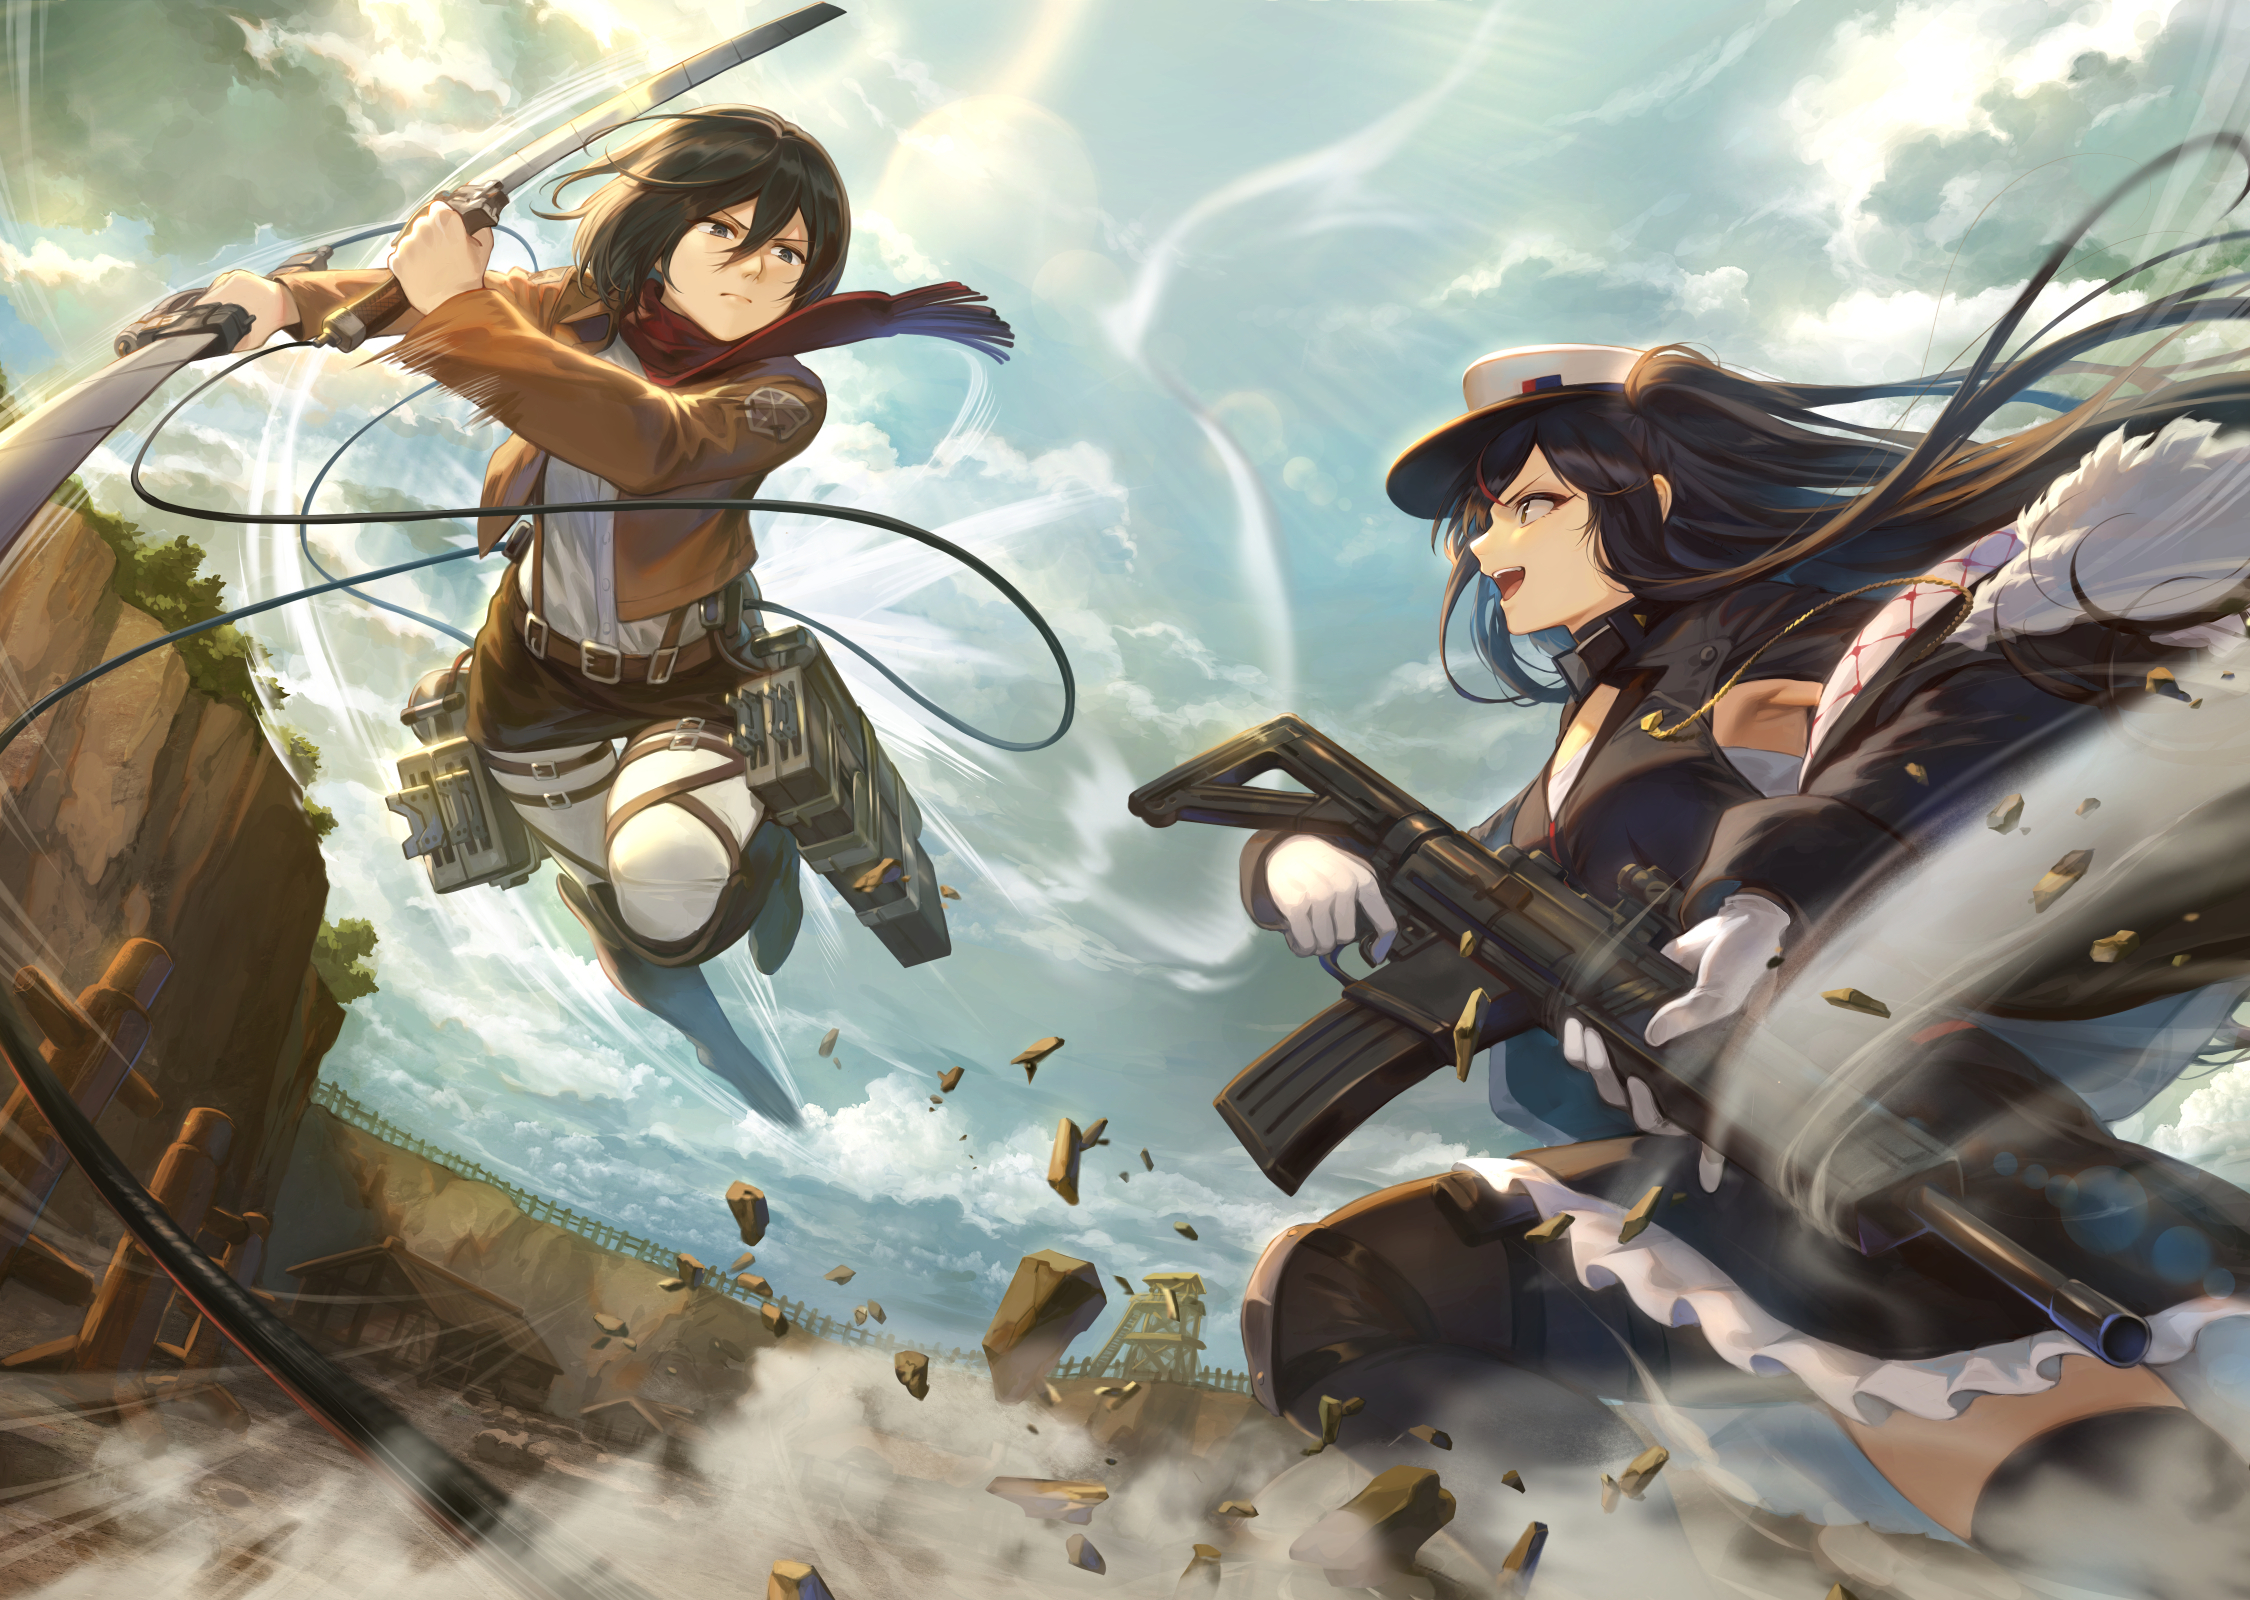 Anime Anime Girls Digital Art Artwork 2D Portrait Two Women Battle Girls With Swords Girls With Guns 2250x1600